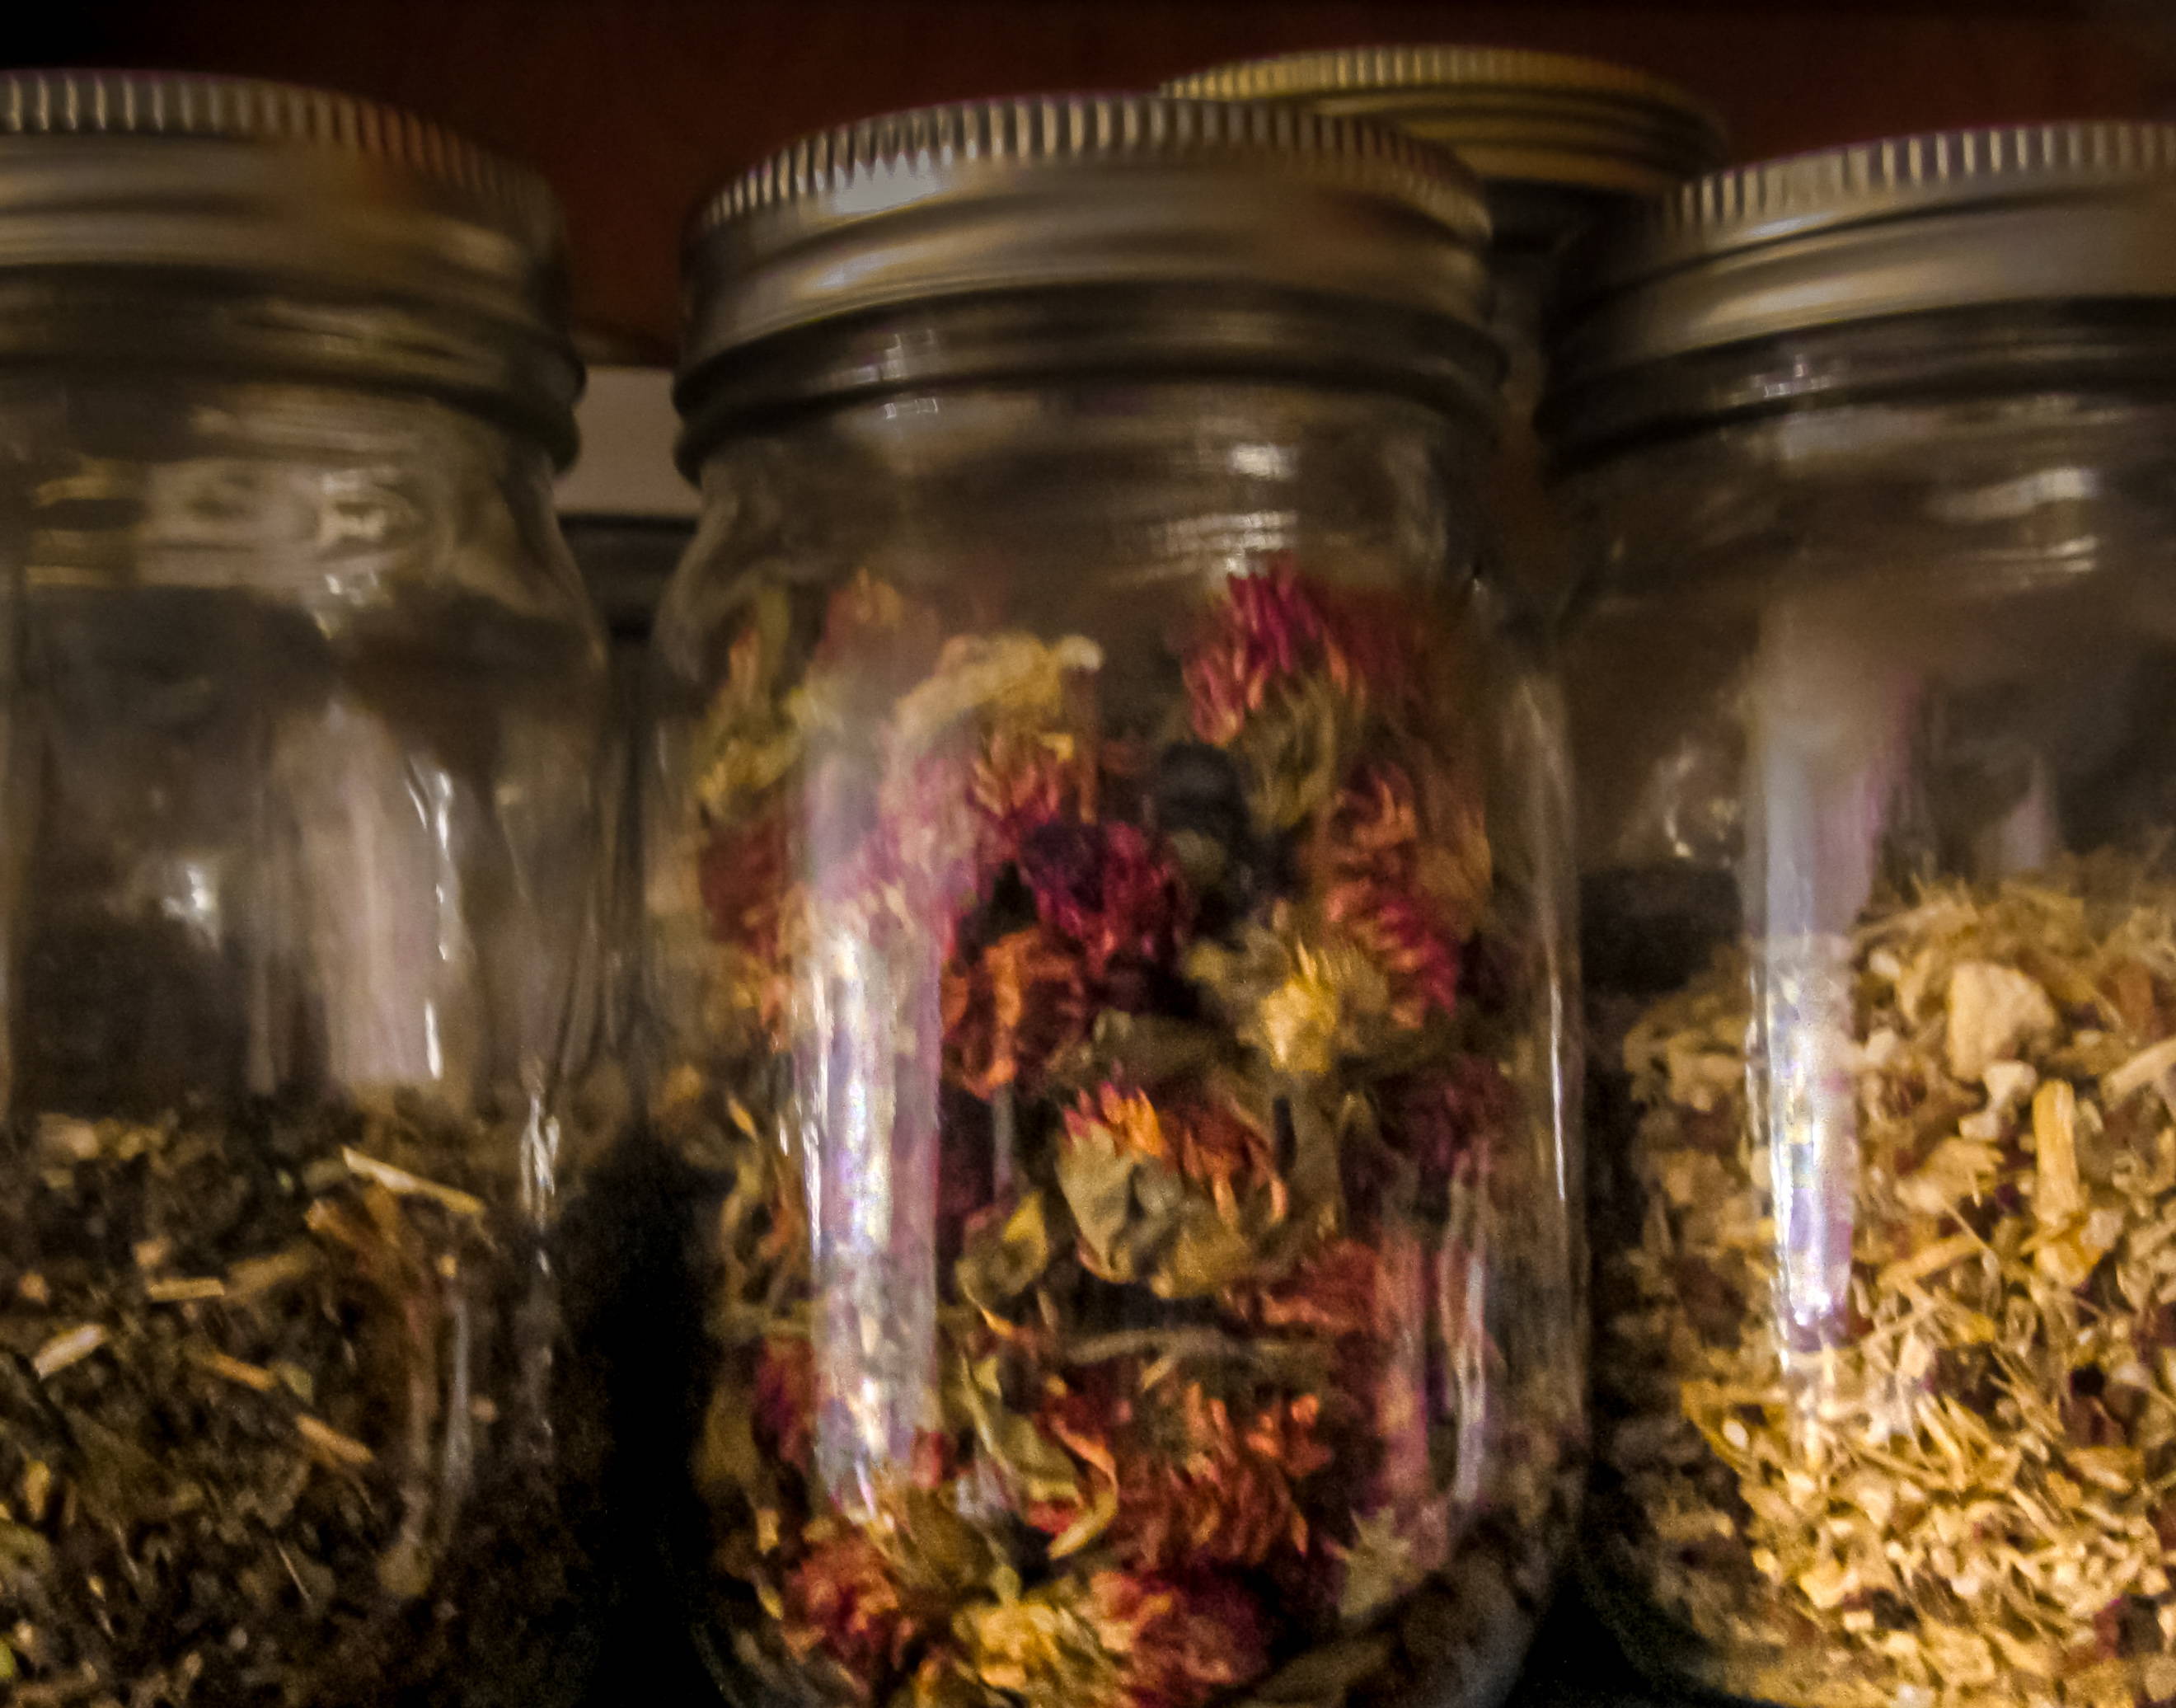 Dried herbs and plants inside of mason jars. 